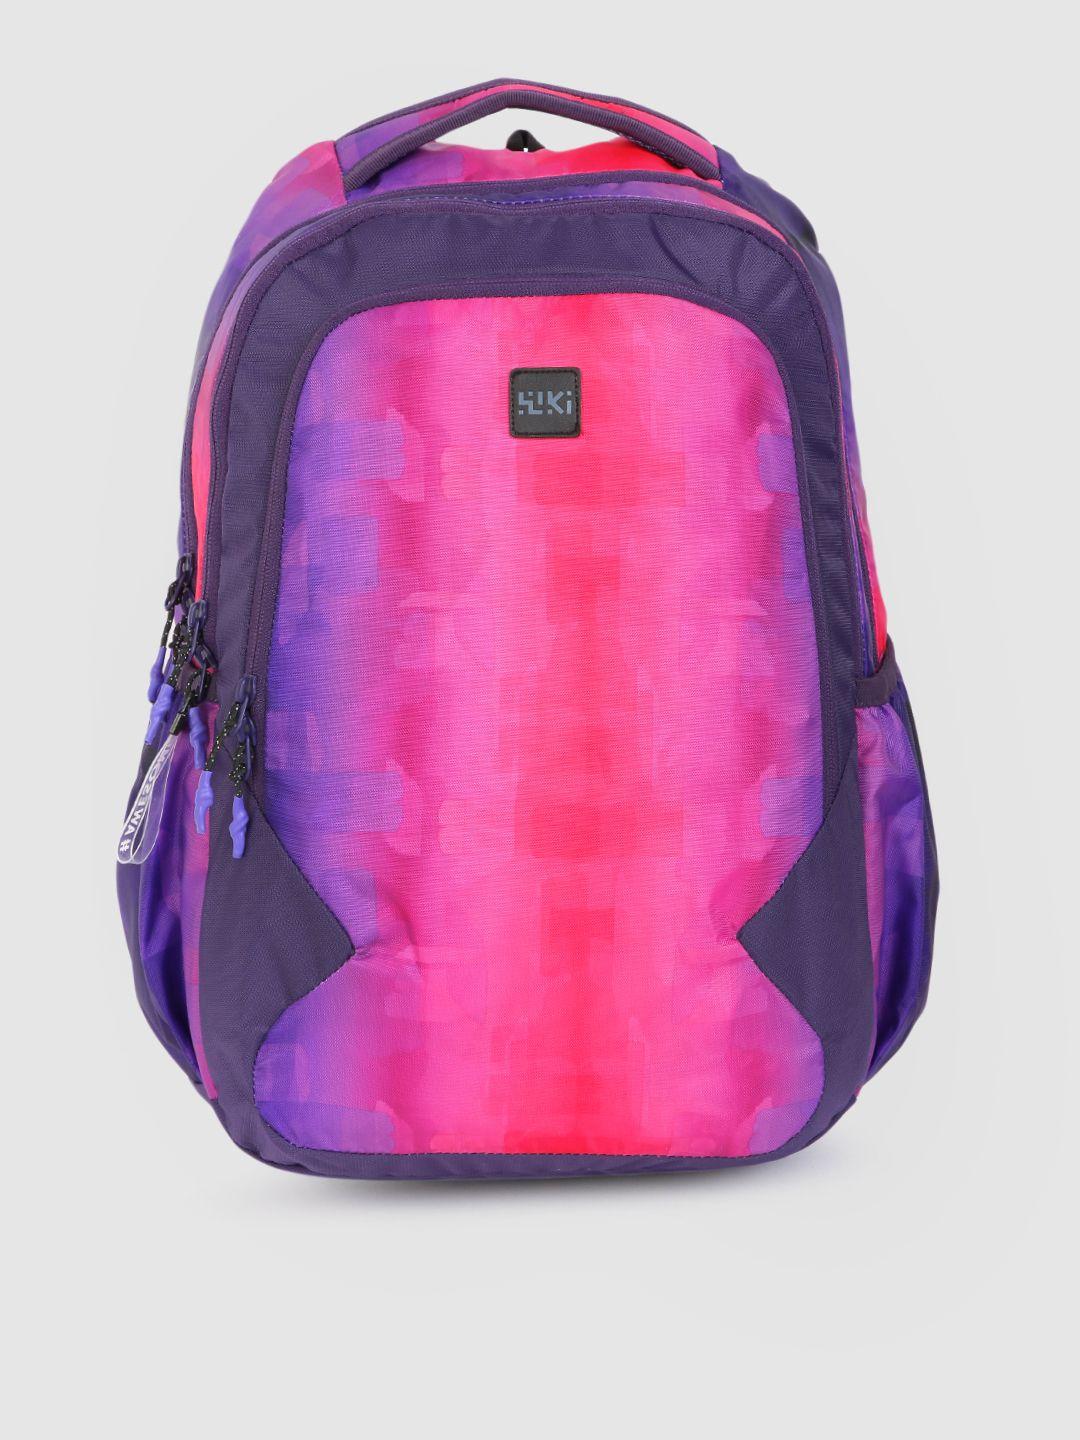 wildcraft unisex purple & pink graphic backpack